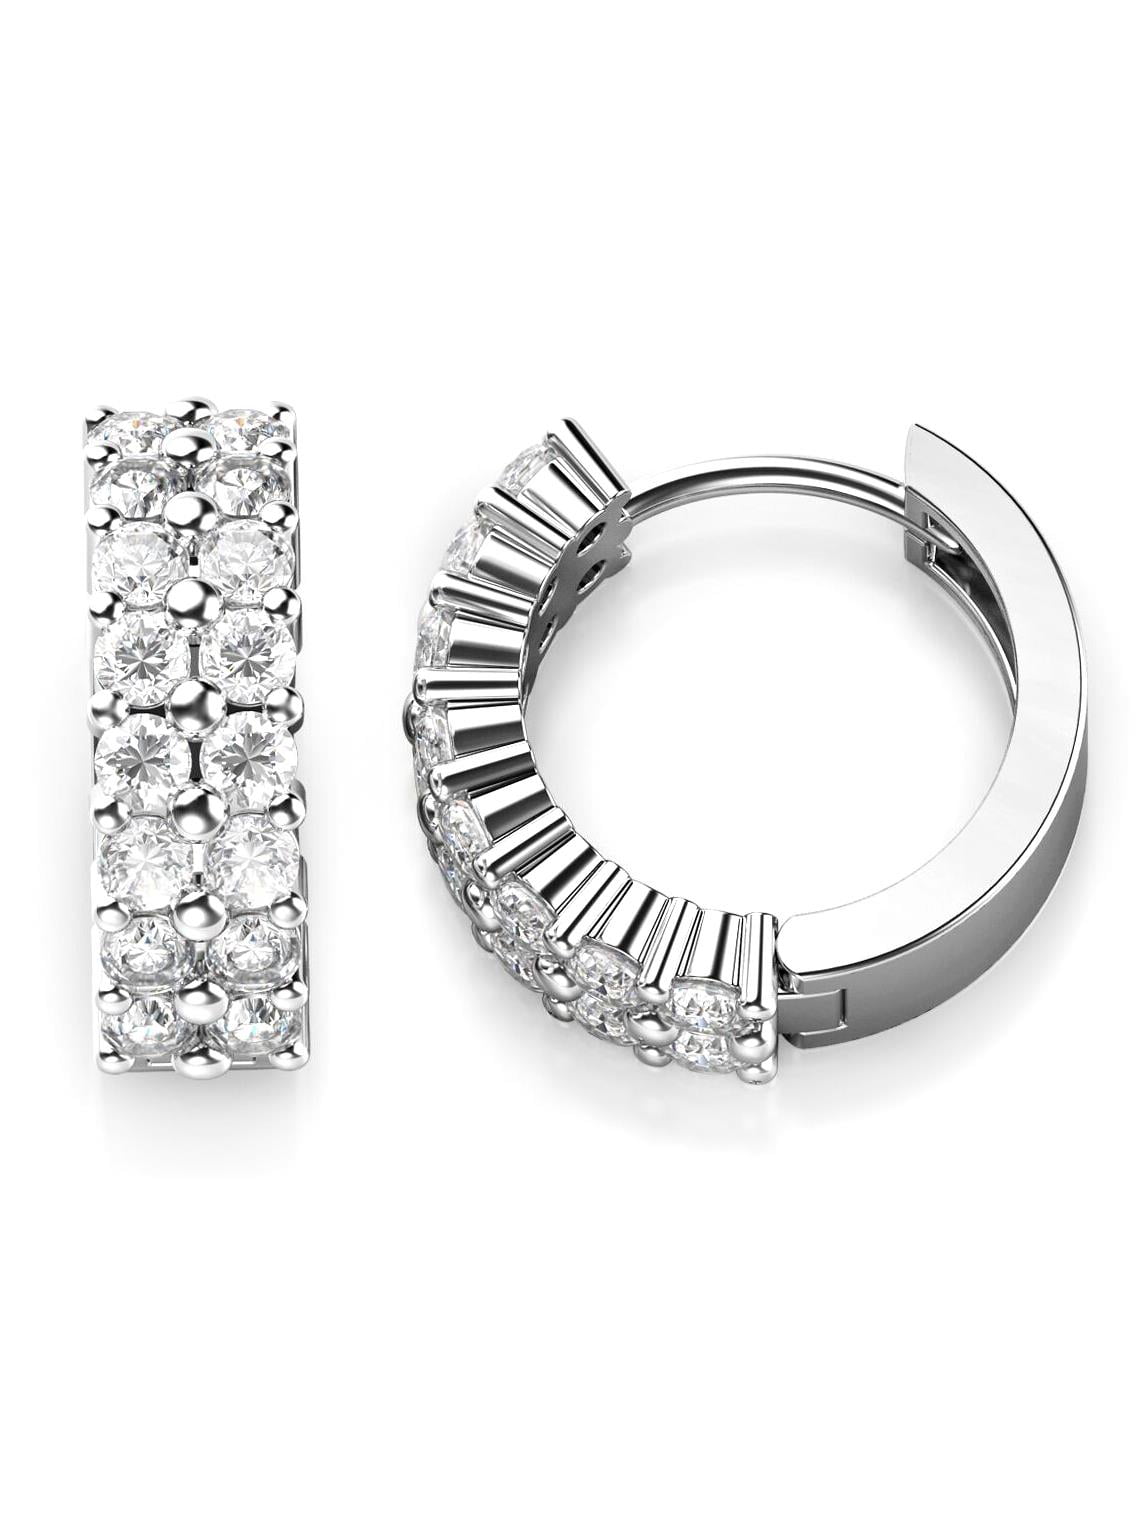 Andrea Jewelers - 925 Sterling Silver Round CZ Cubic Zirconia Huggie Hoop Earrings